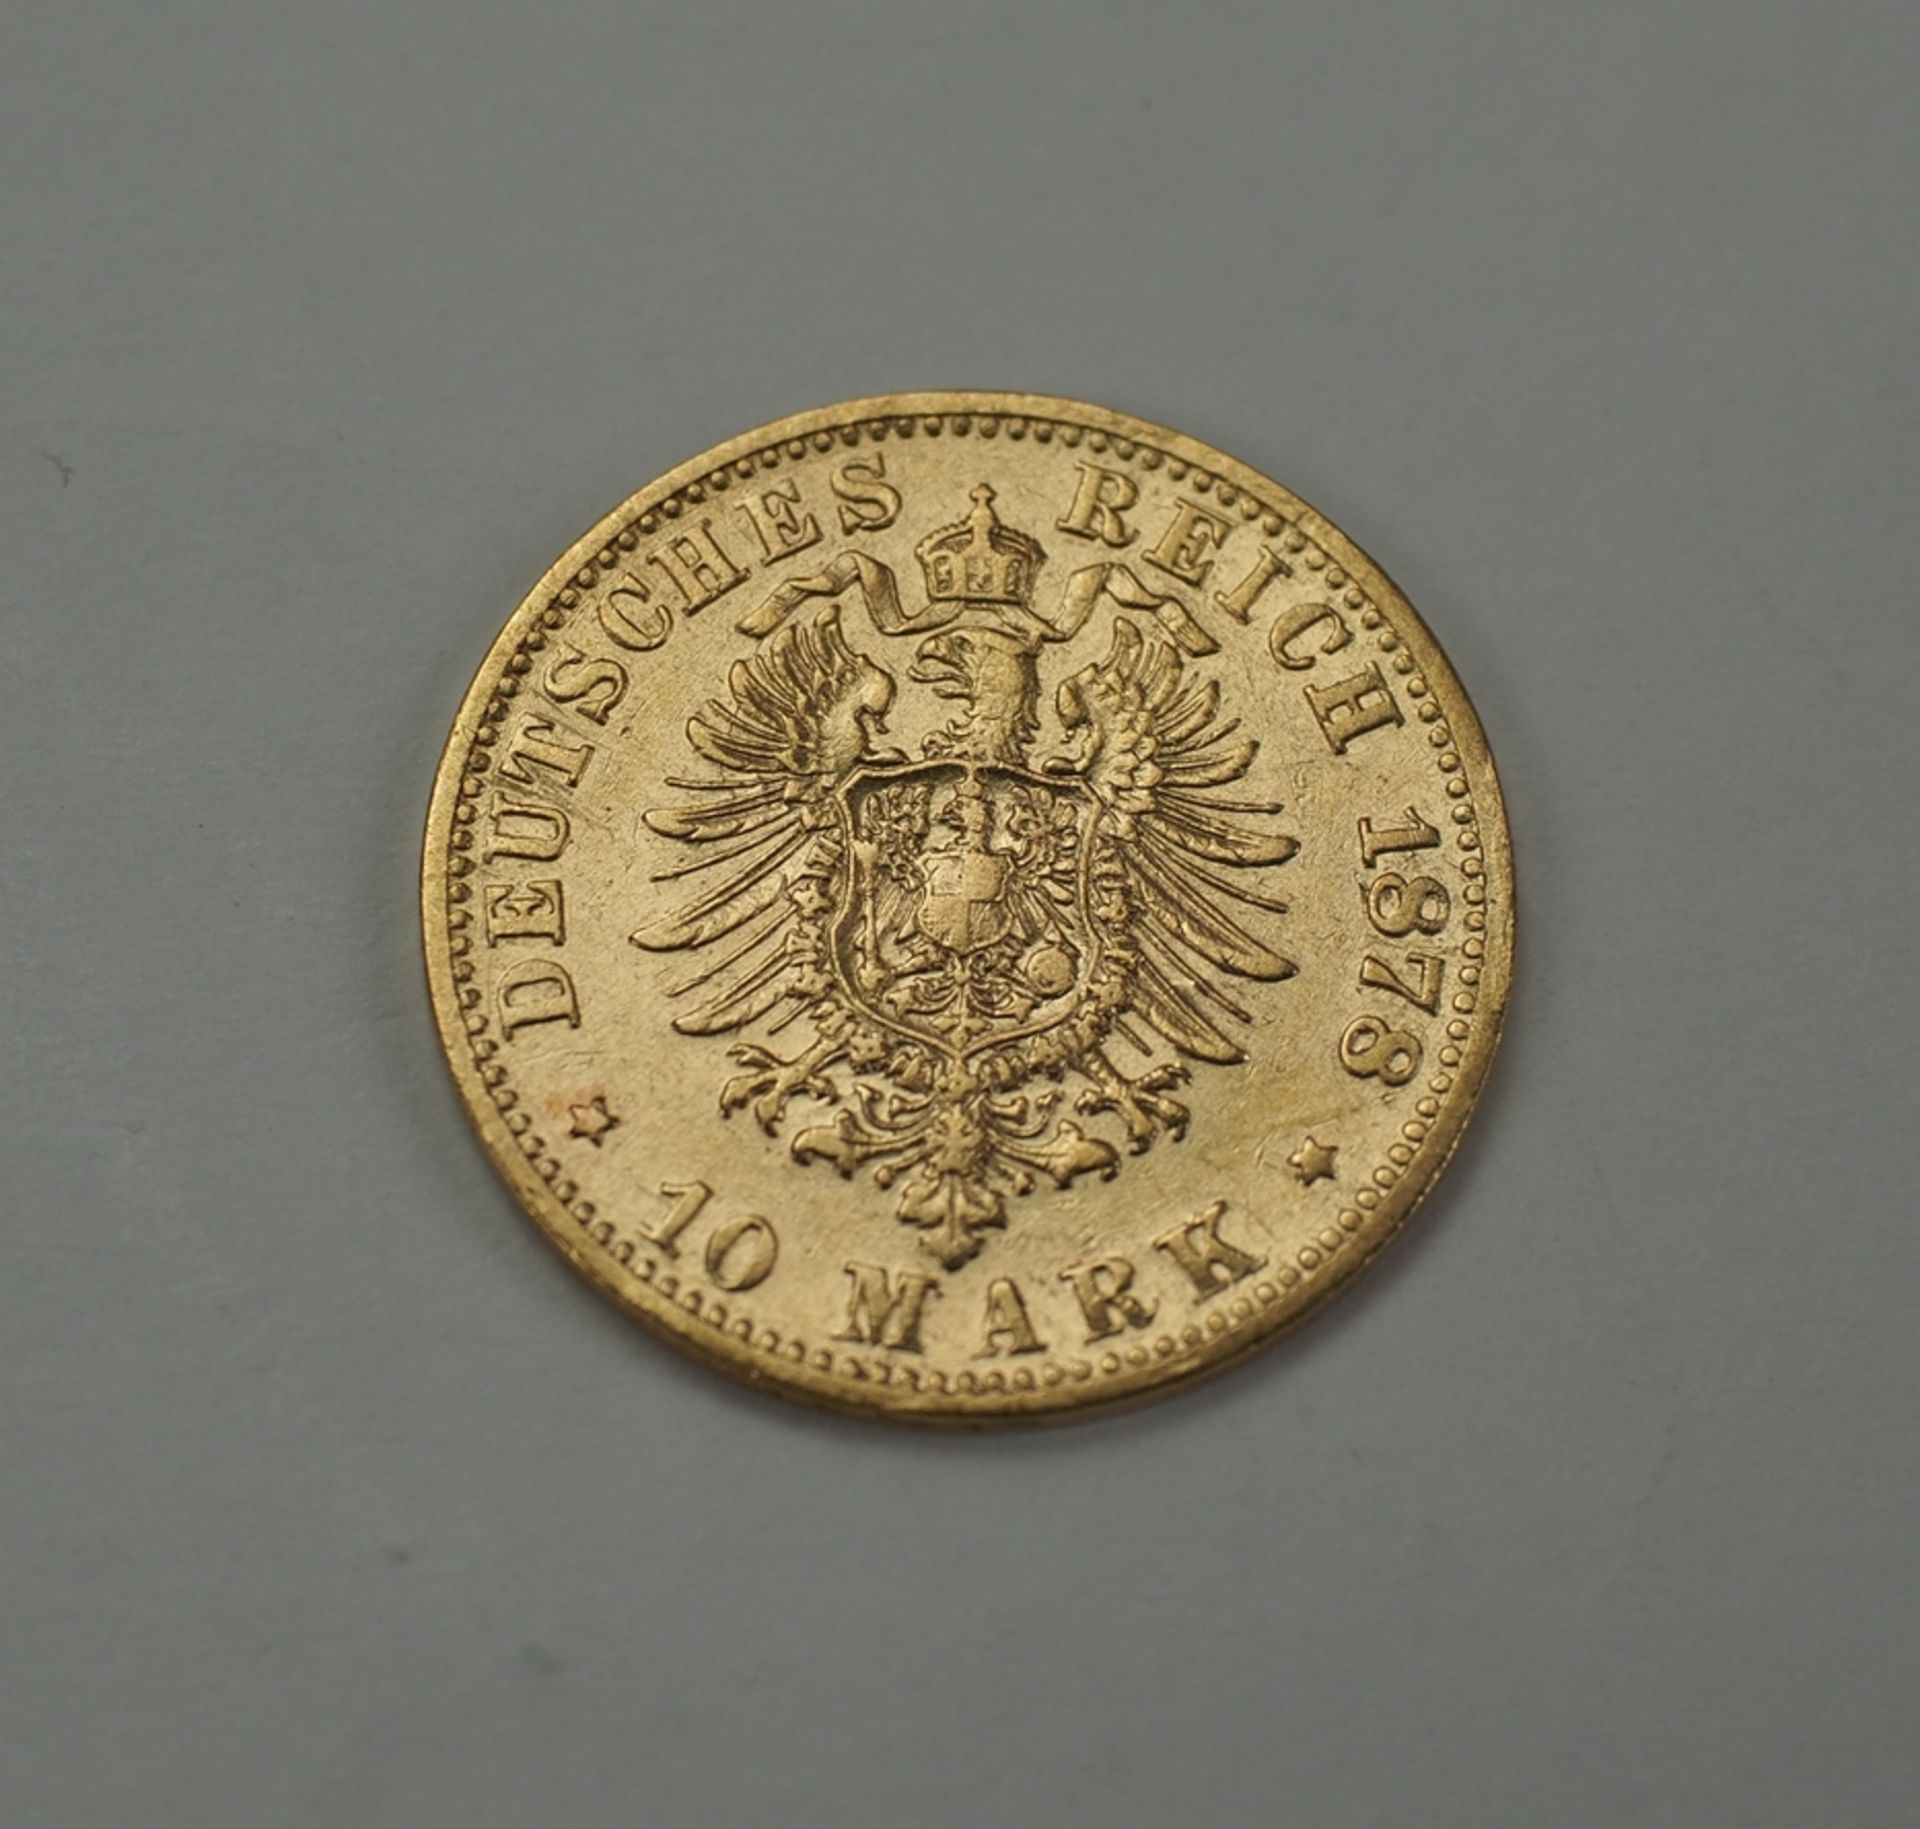 Bayern: 10 Mark 1878 - GOLD. - Image 2 of 3